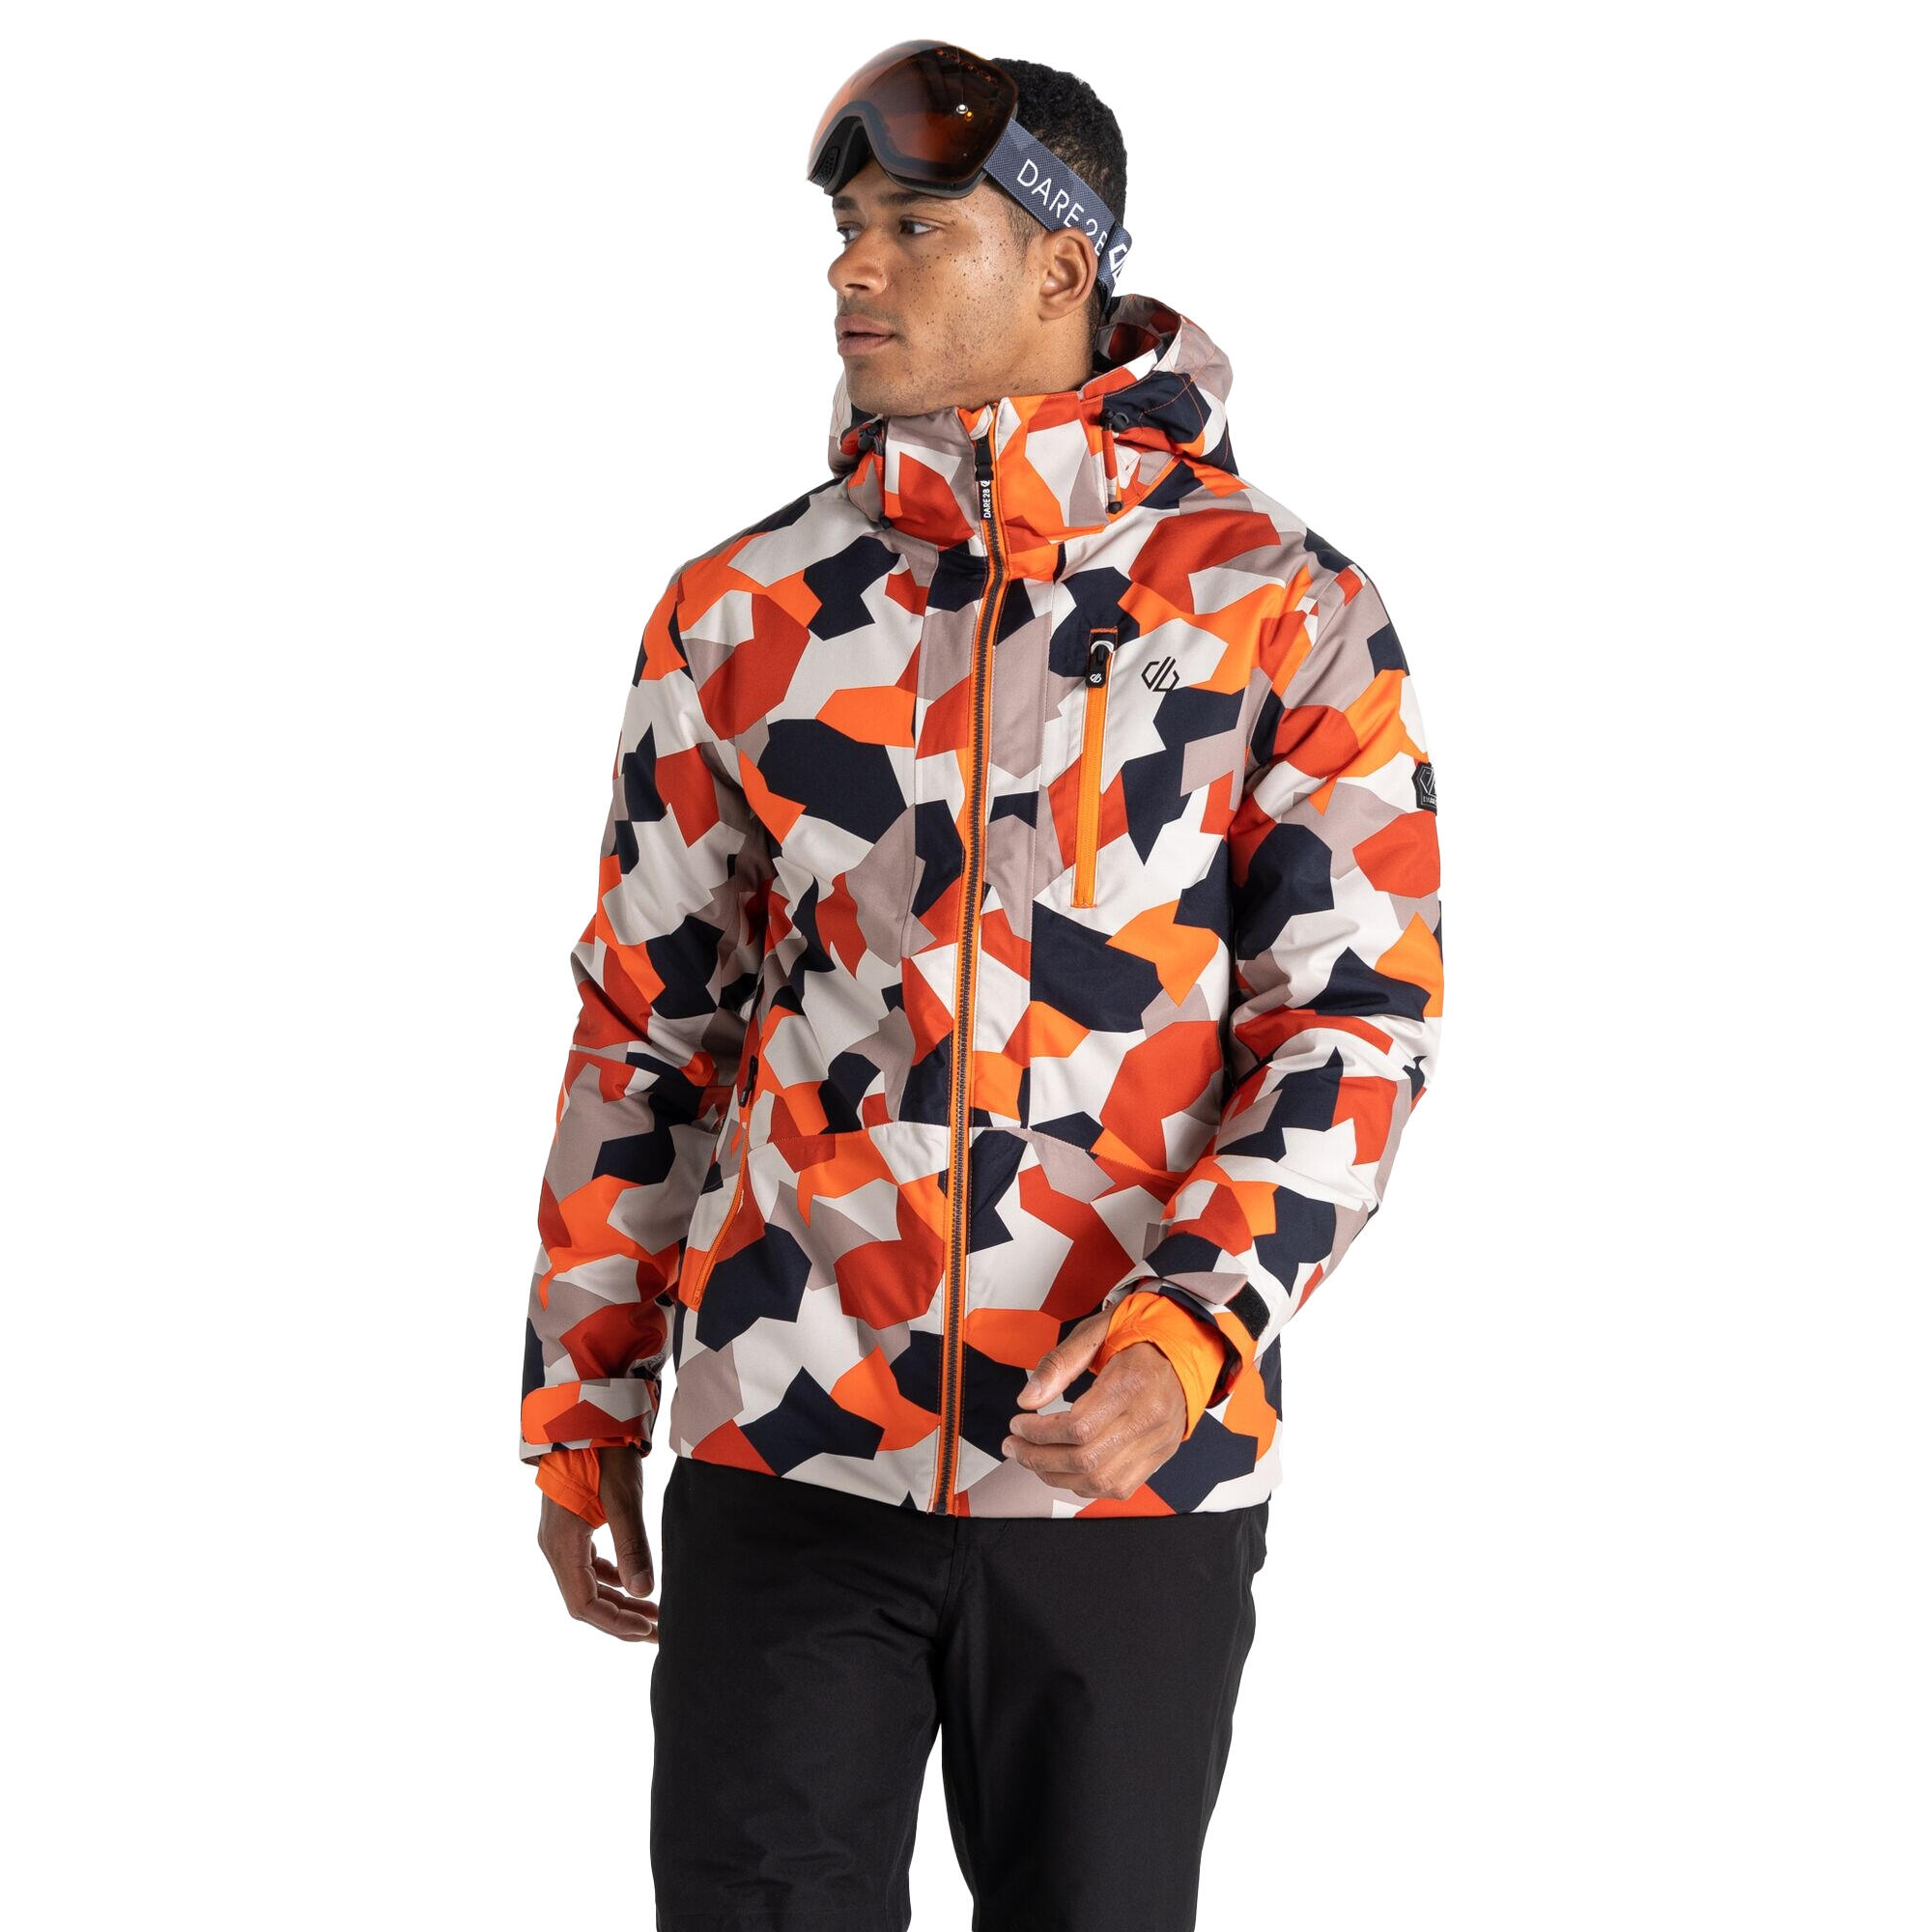 Mens Edge Camo Ski Jacket (Puffins Orange) 4/5